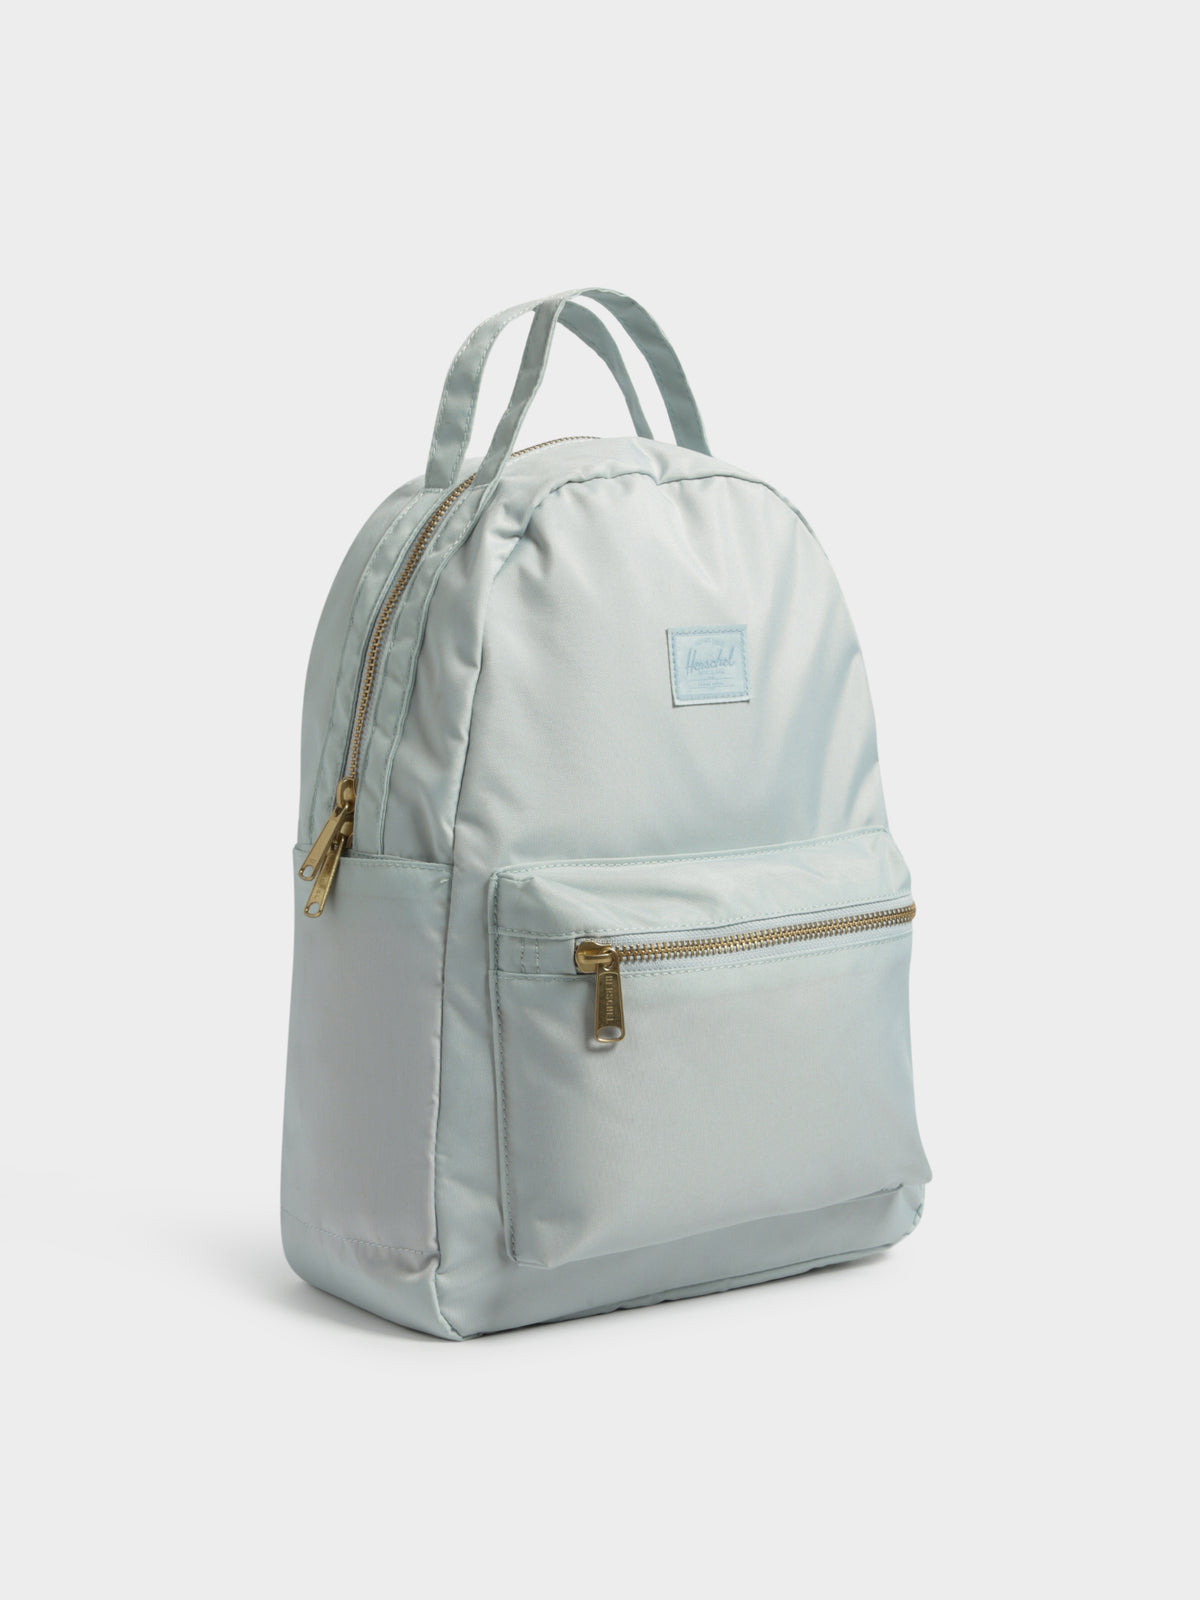 Nova Small Backpack in Ballad Blue Pastel